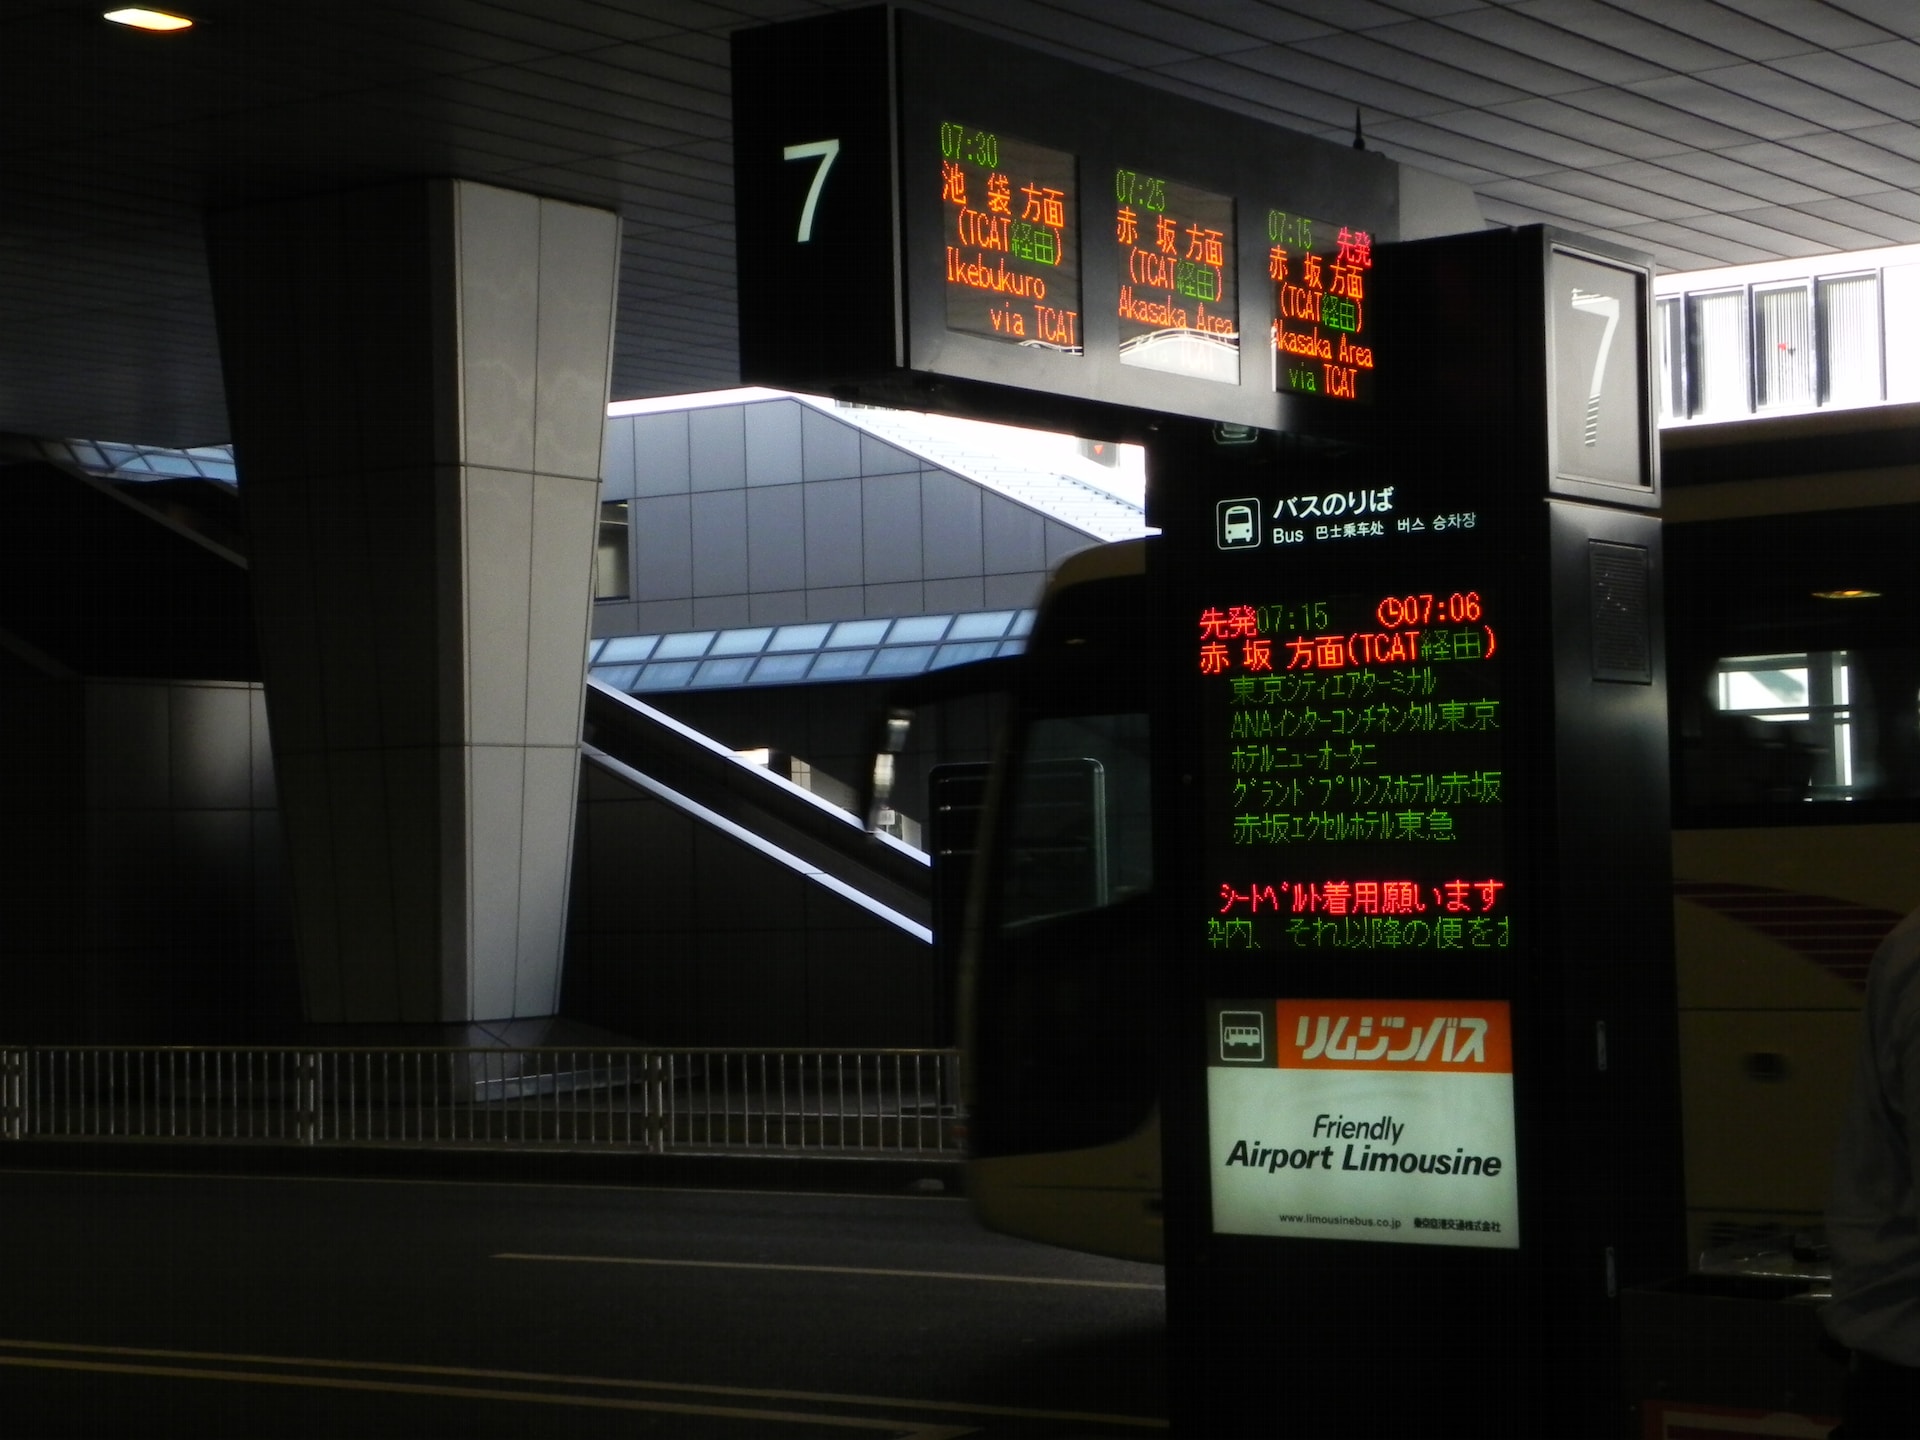 Inside Tokyo Haneda airport